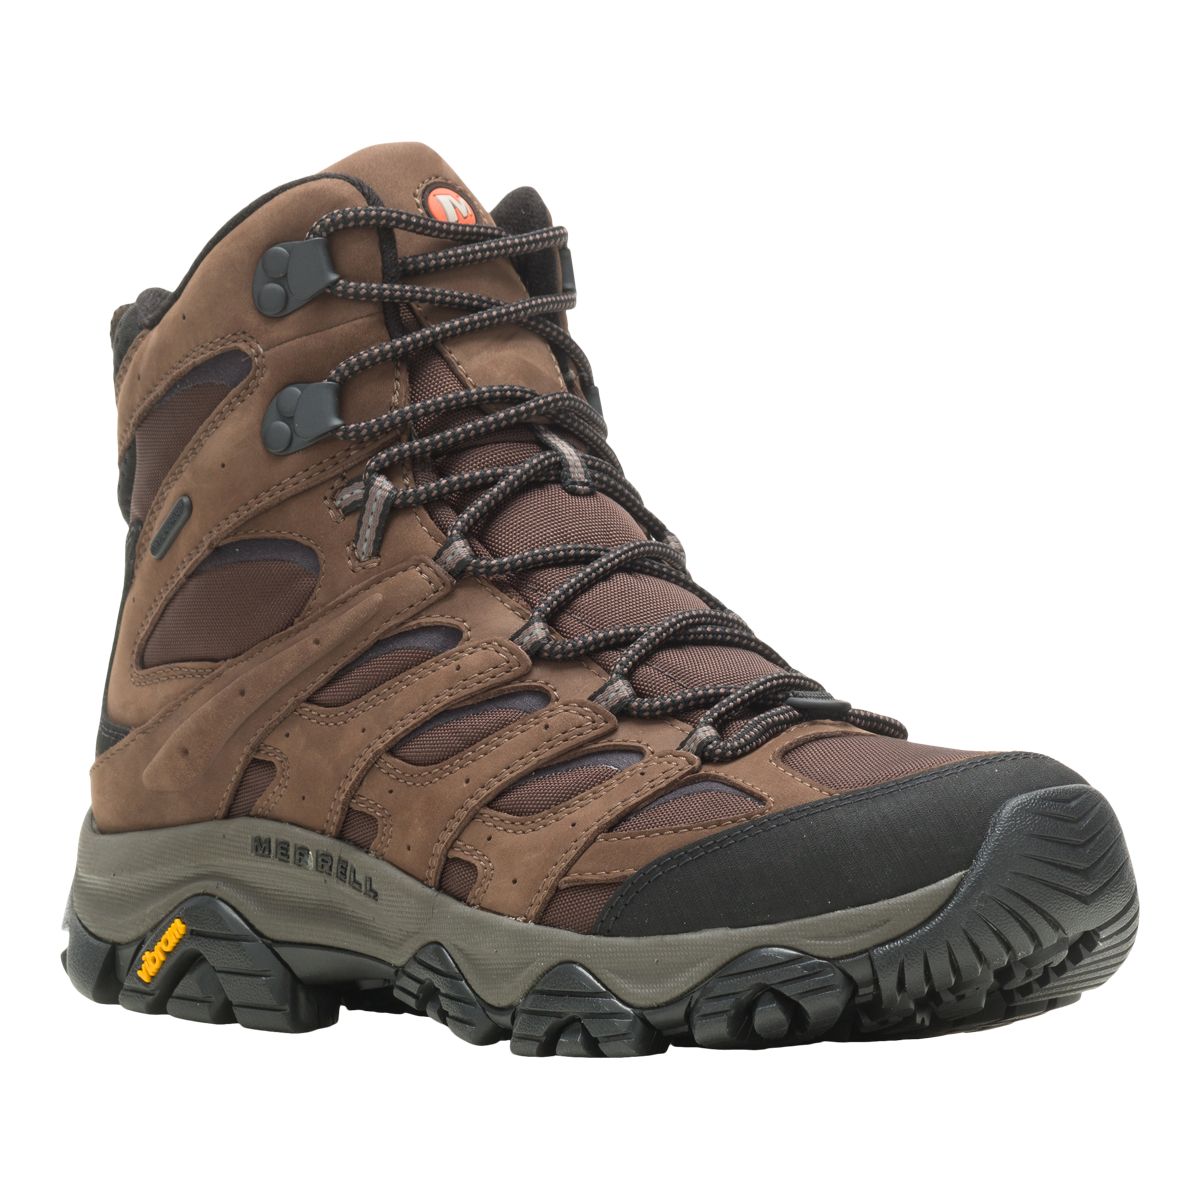 Merrell Men's MOAB 3 Apex Mid Hiking Boots, Waterproof